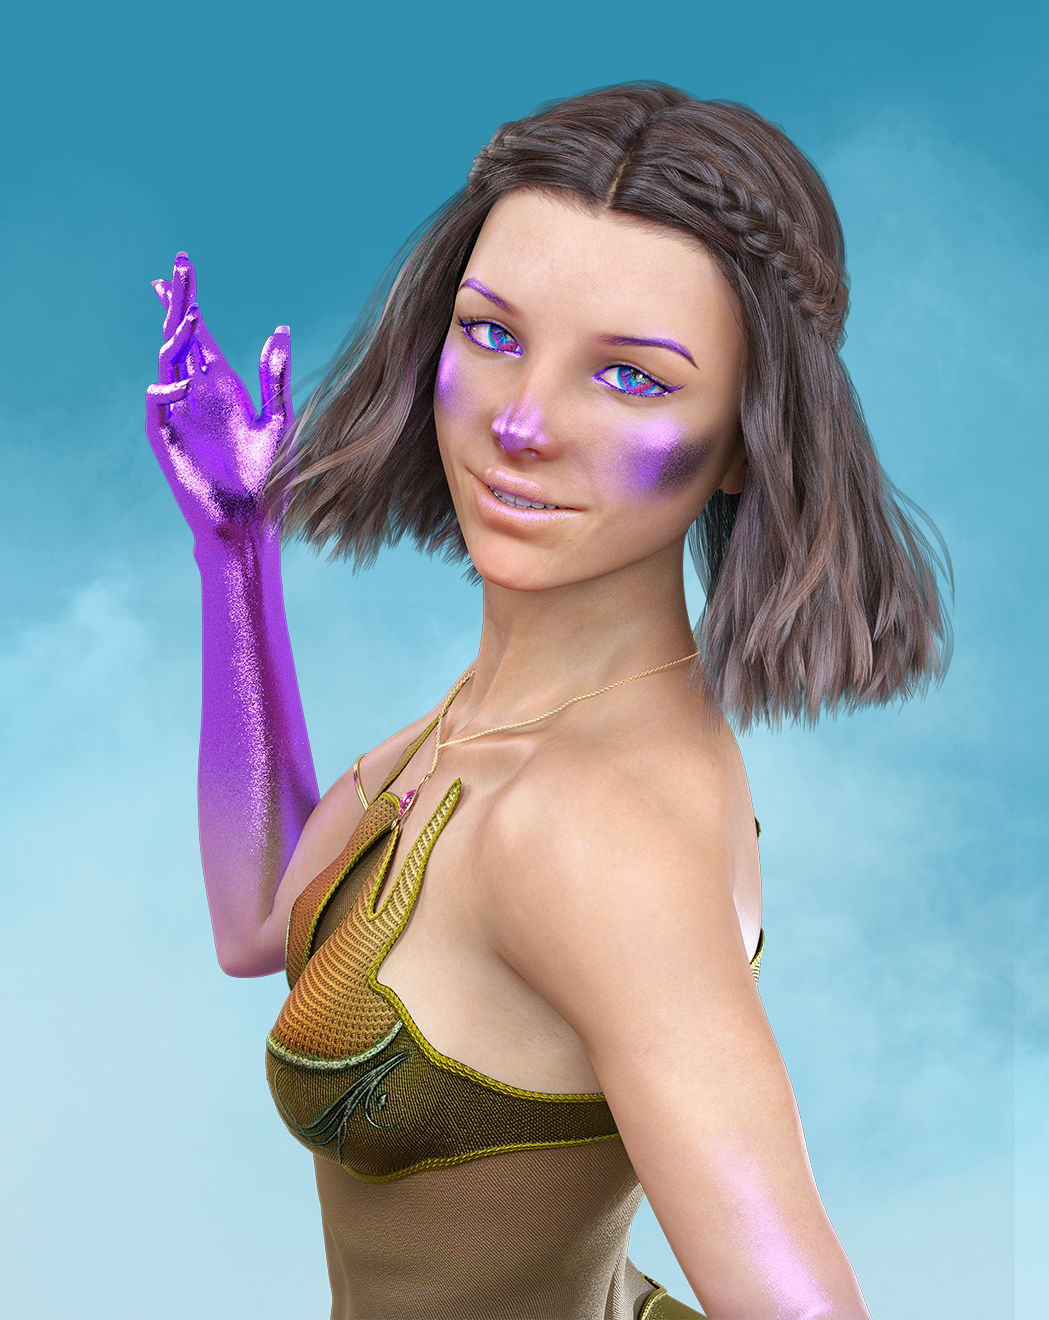 Fiore for Genesis 8 Female by: hotlilme74, 3D Models by Daz 3D